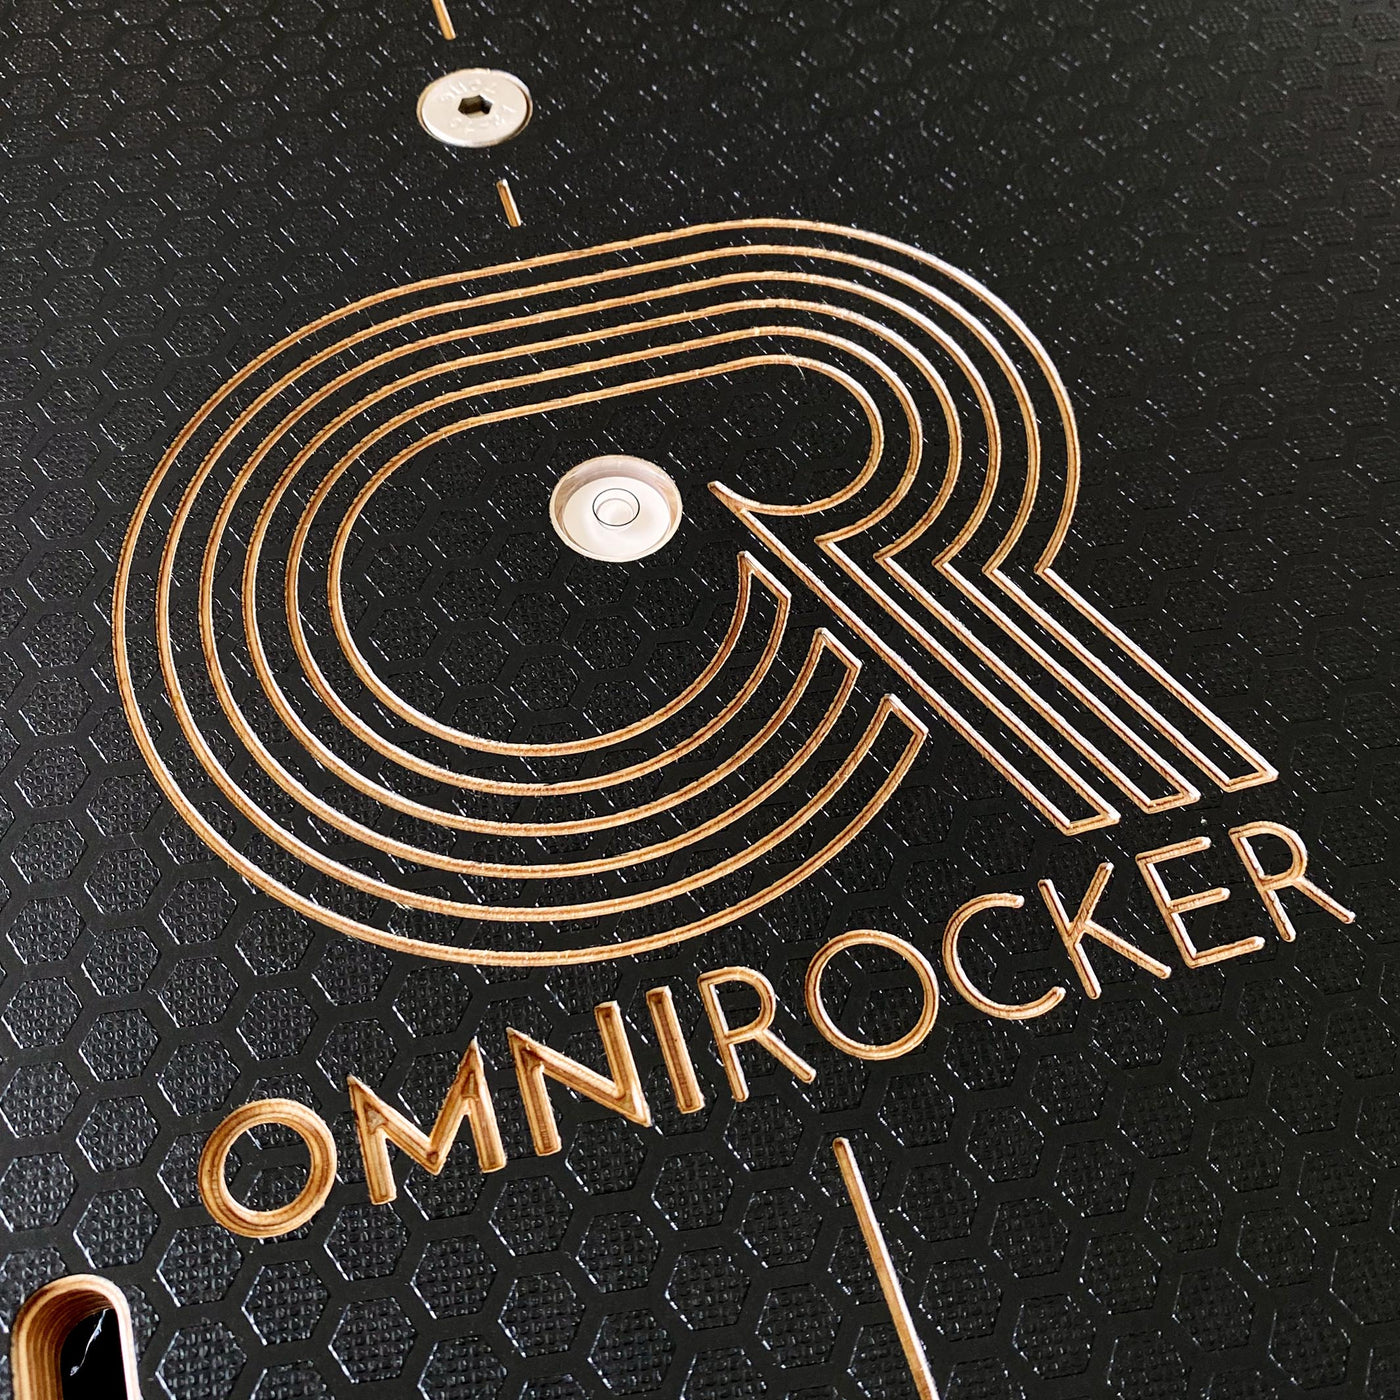 Omnirocker  logo on rocker plate for Turbo Trainers. Stealth finish.